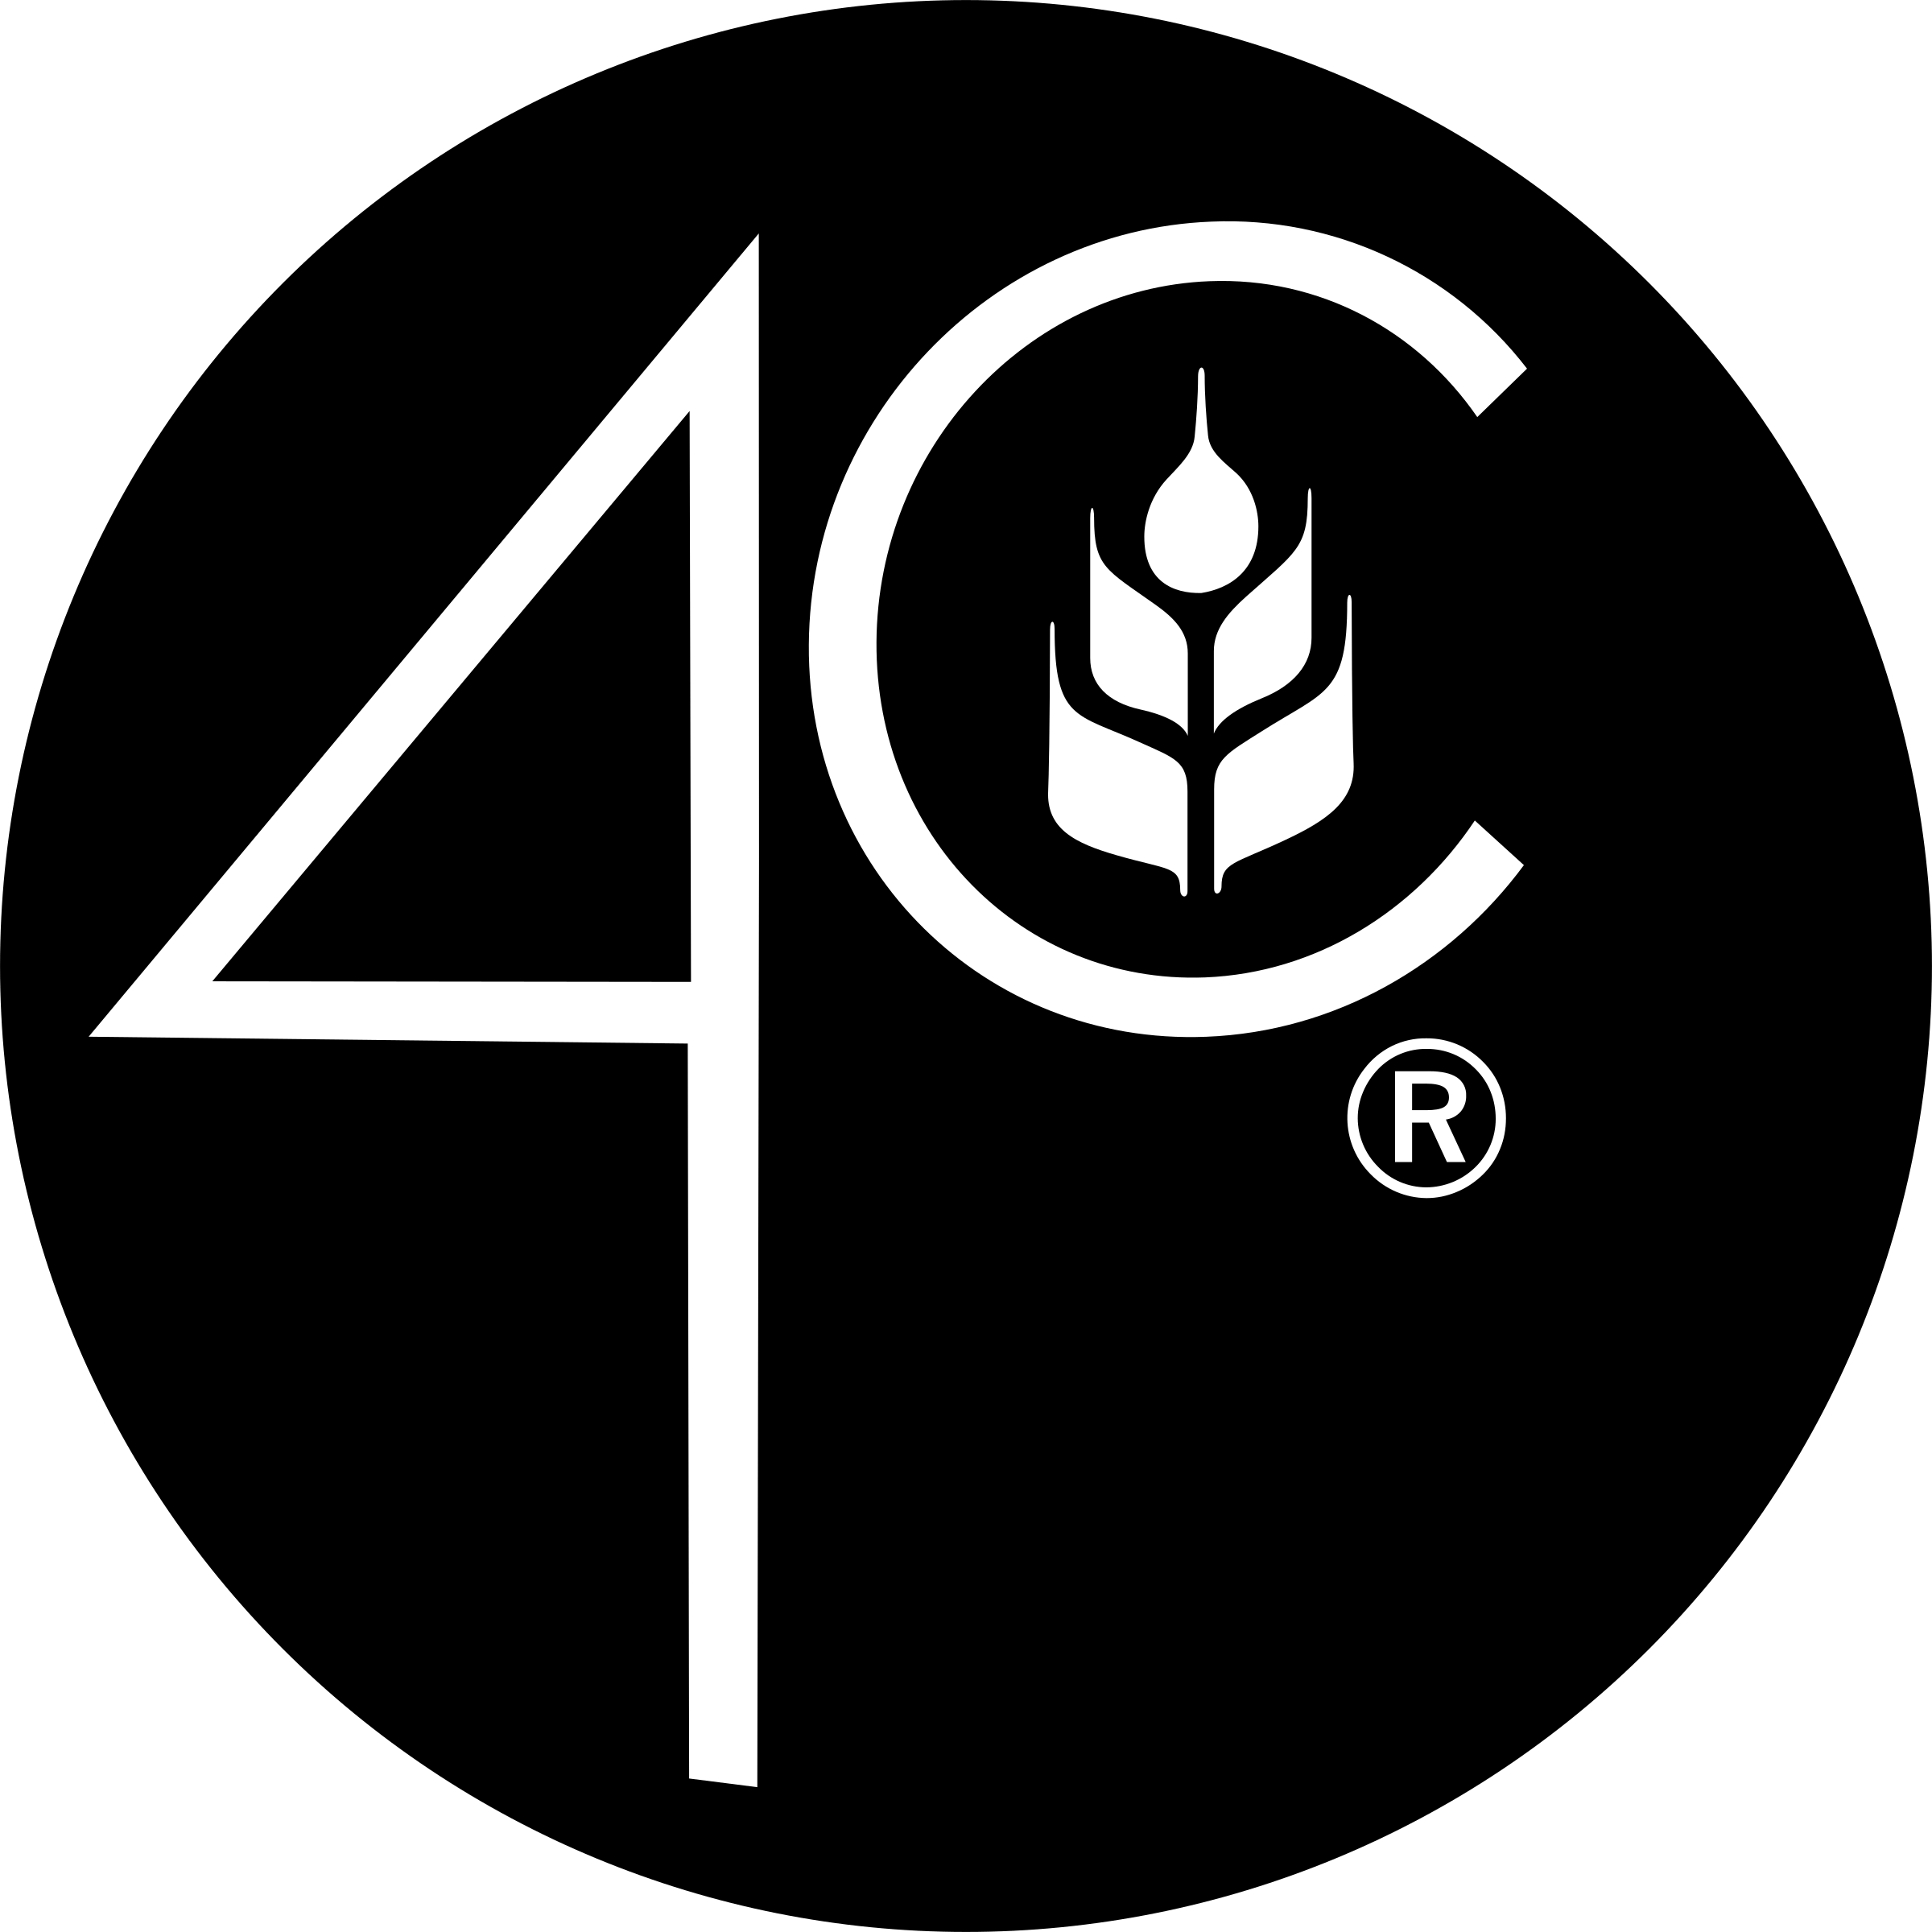 4C Logo - 4C FOODS Corp Logo PNG Transparent & SVG Vector - Freebie Supply